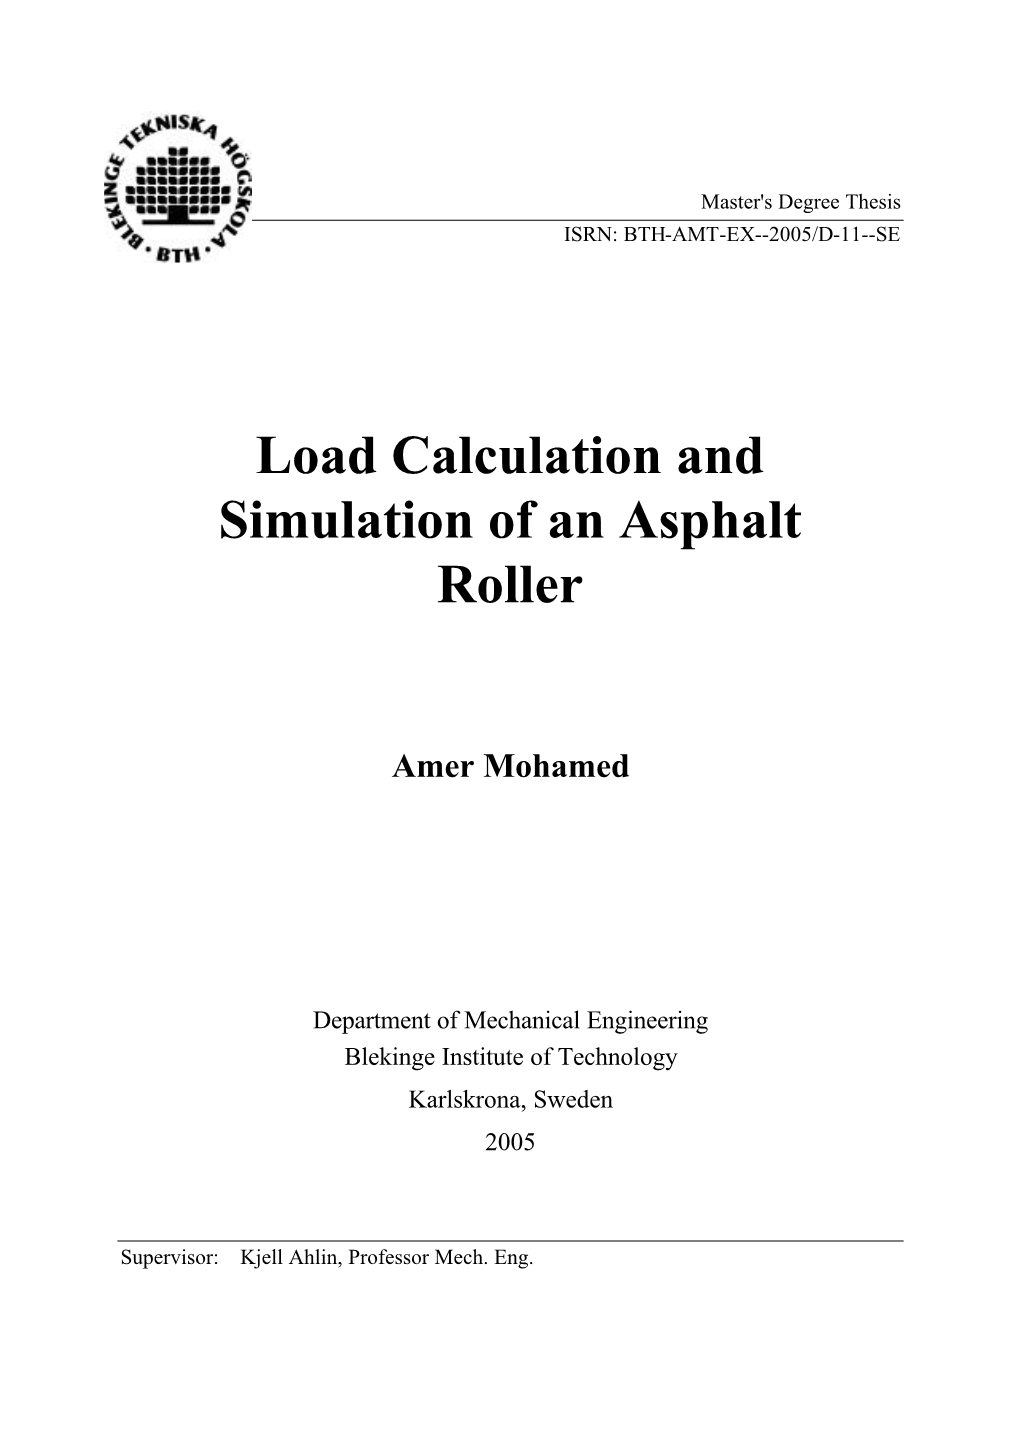 Load Calculation and Simulation of an Asphalt Roller